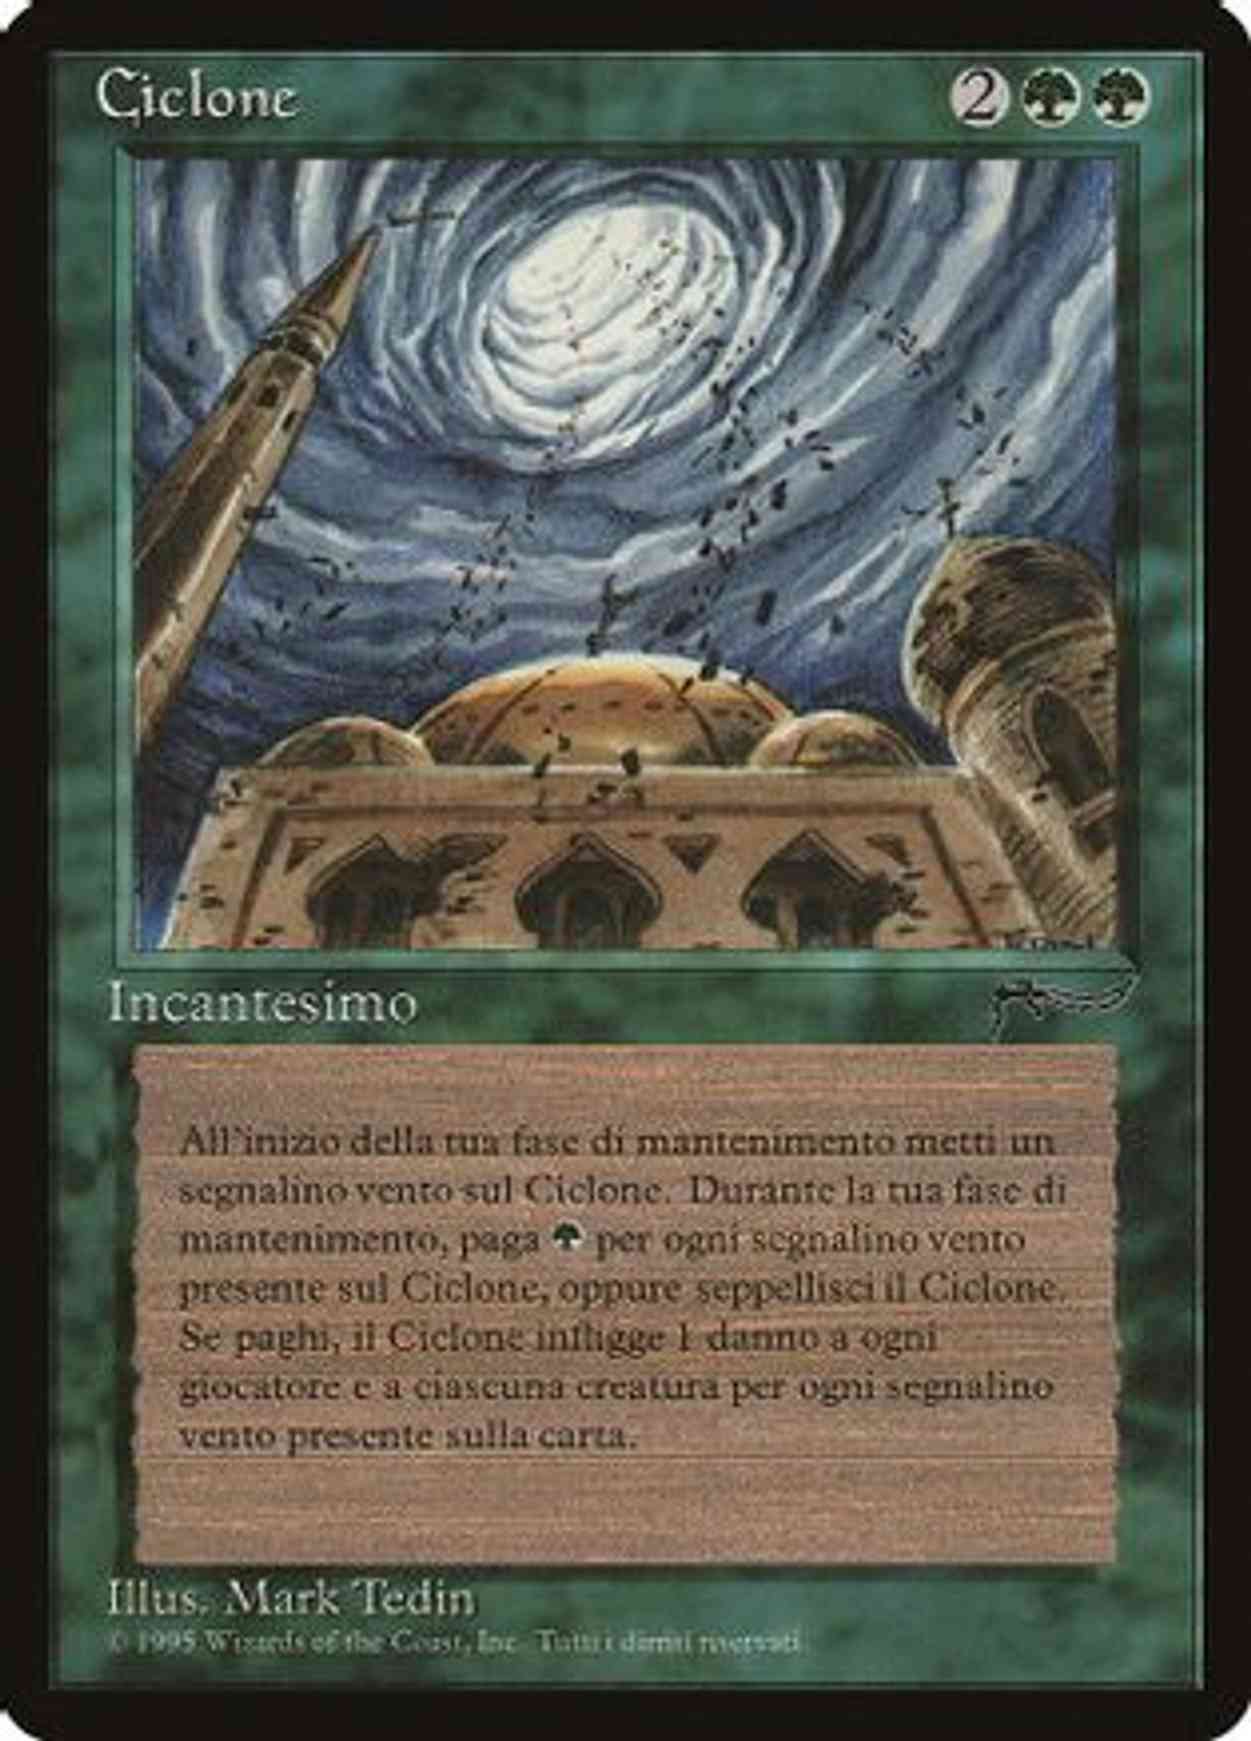 Cyclone (Italian) - "Ciclone" magic card front